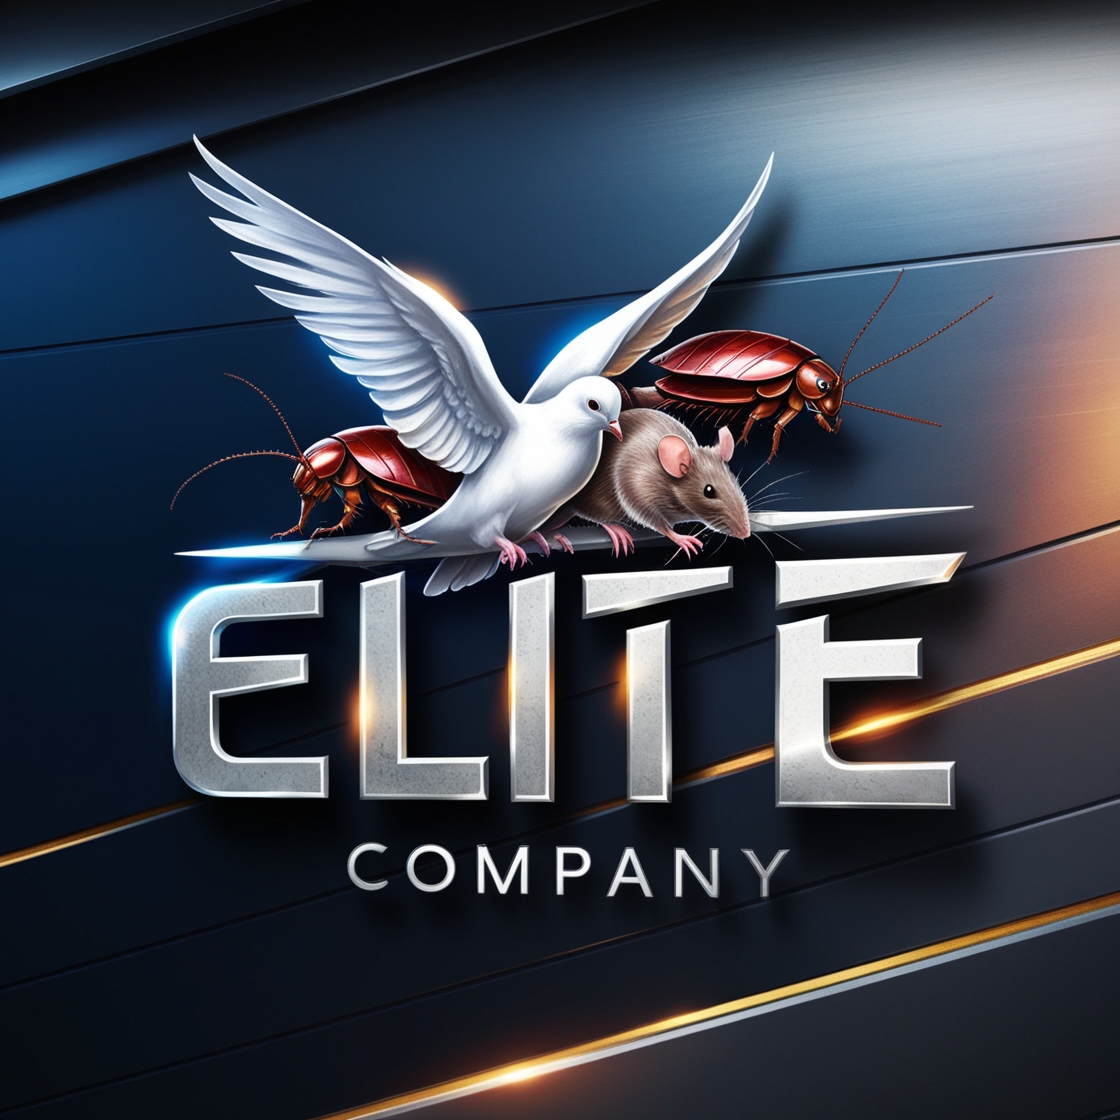 Default_The_Elite_company_logo_rendered_in_striking_digital_il_3.jpg